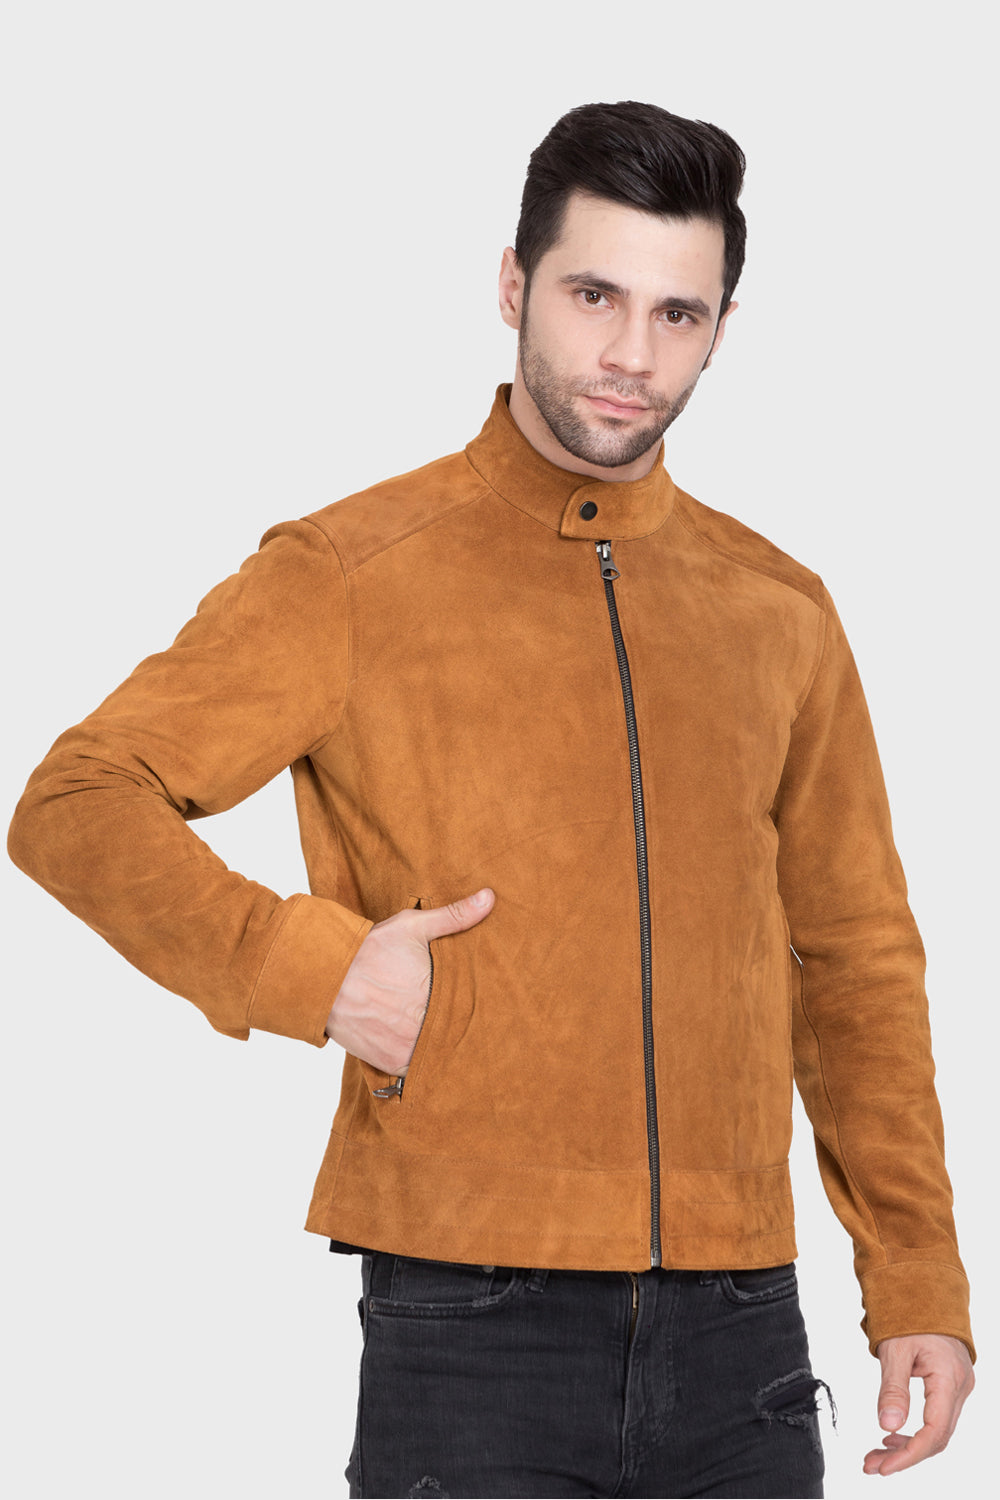 Men's Leather Jacket [PDF & DXF pattern] - Creative Awl Studio